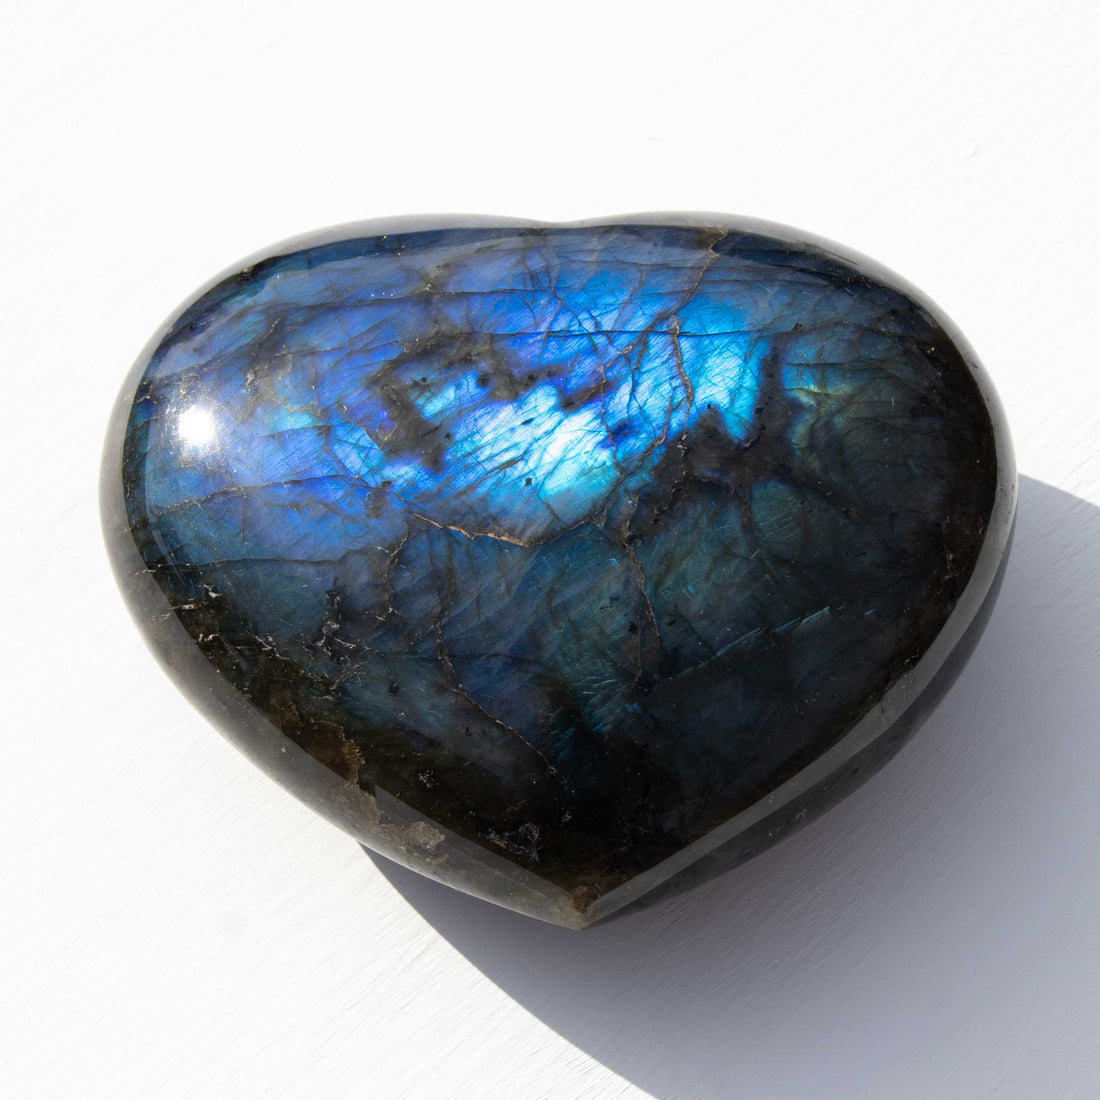 Labradorite - Heart, Blue Flash